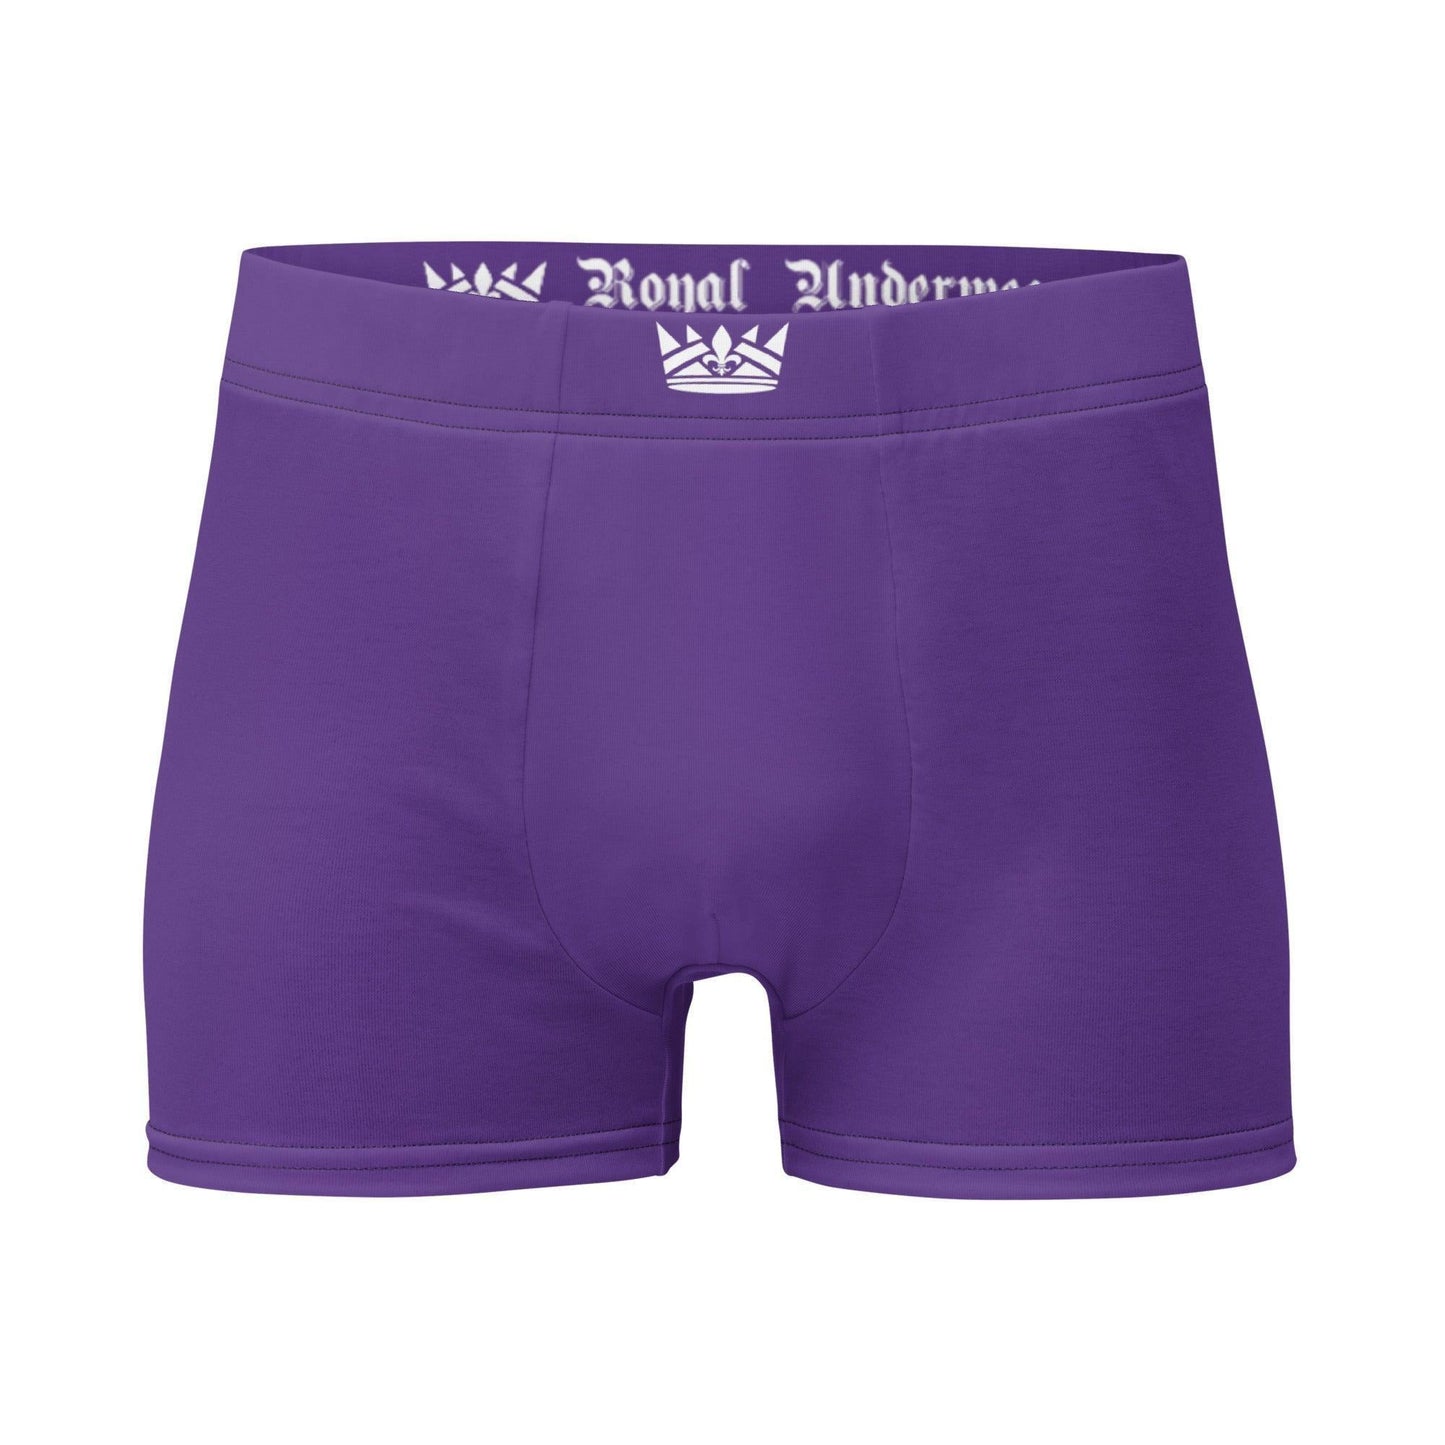 Indigo Royal Underwear Boxershorts -- Indigo Royal Underwear Boxershorts - undefined Boxershorts | JLR Design